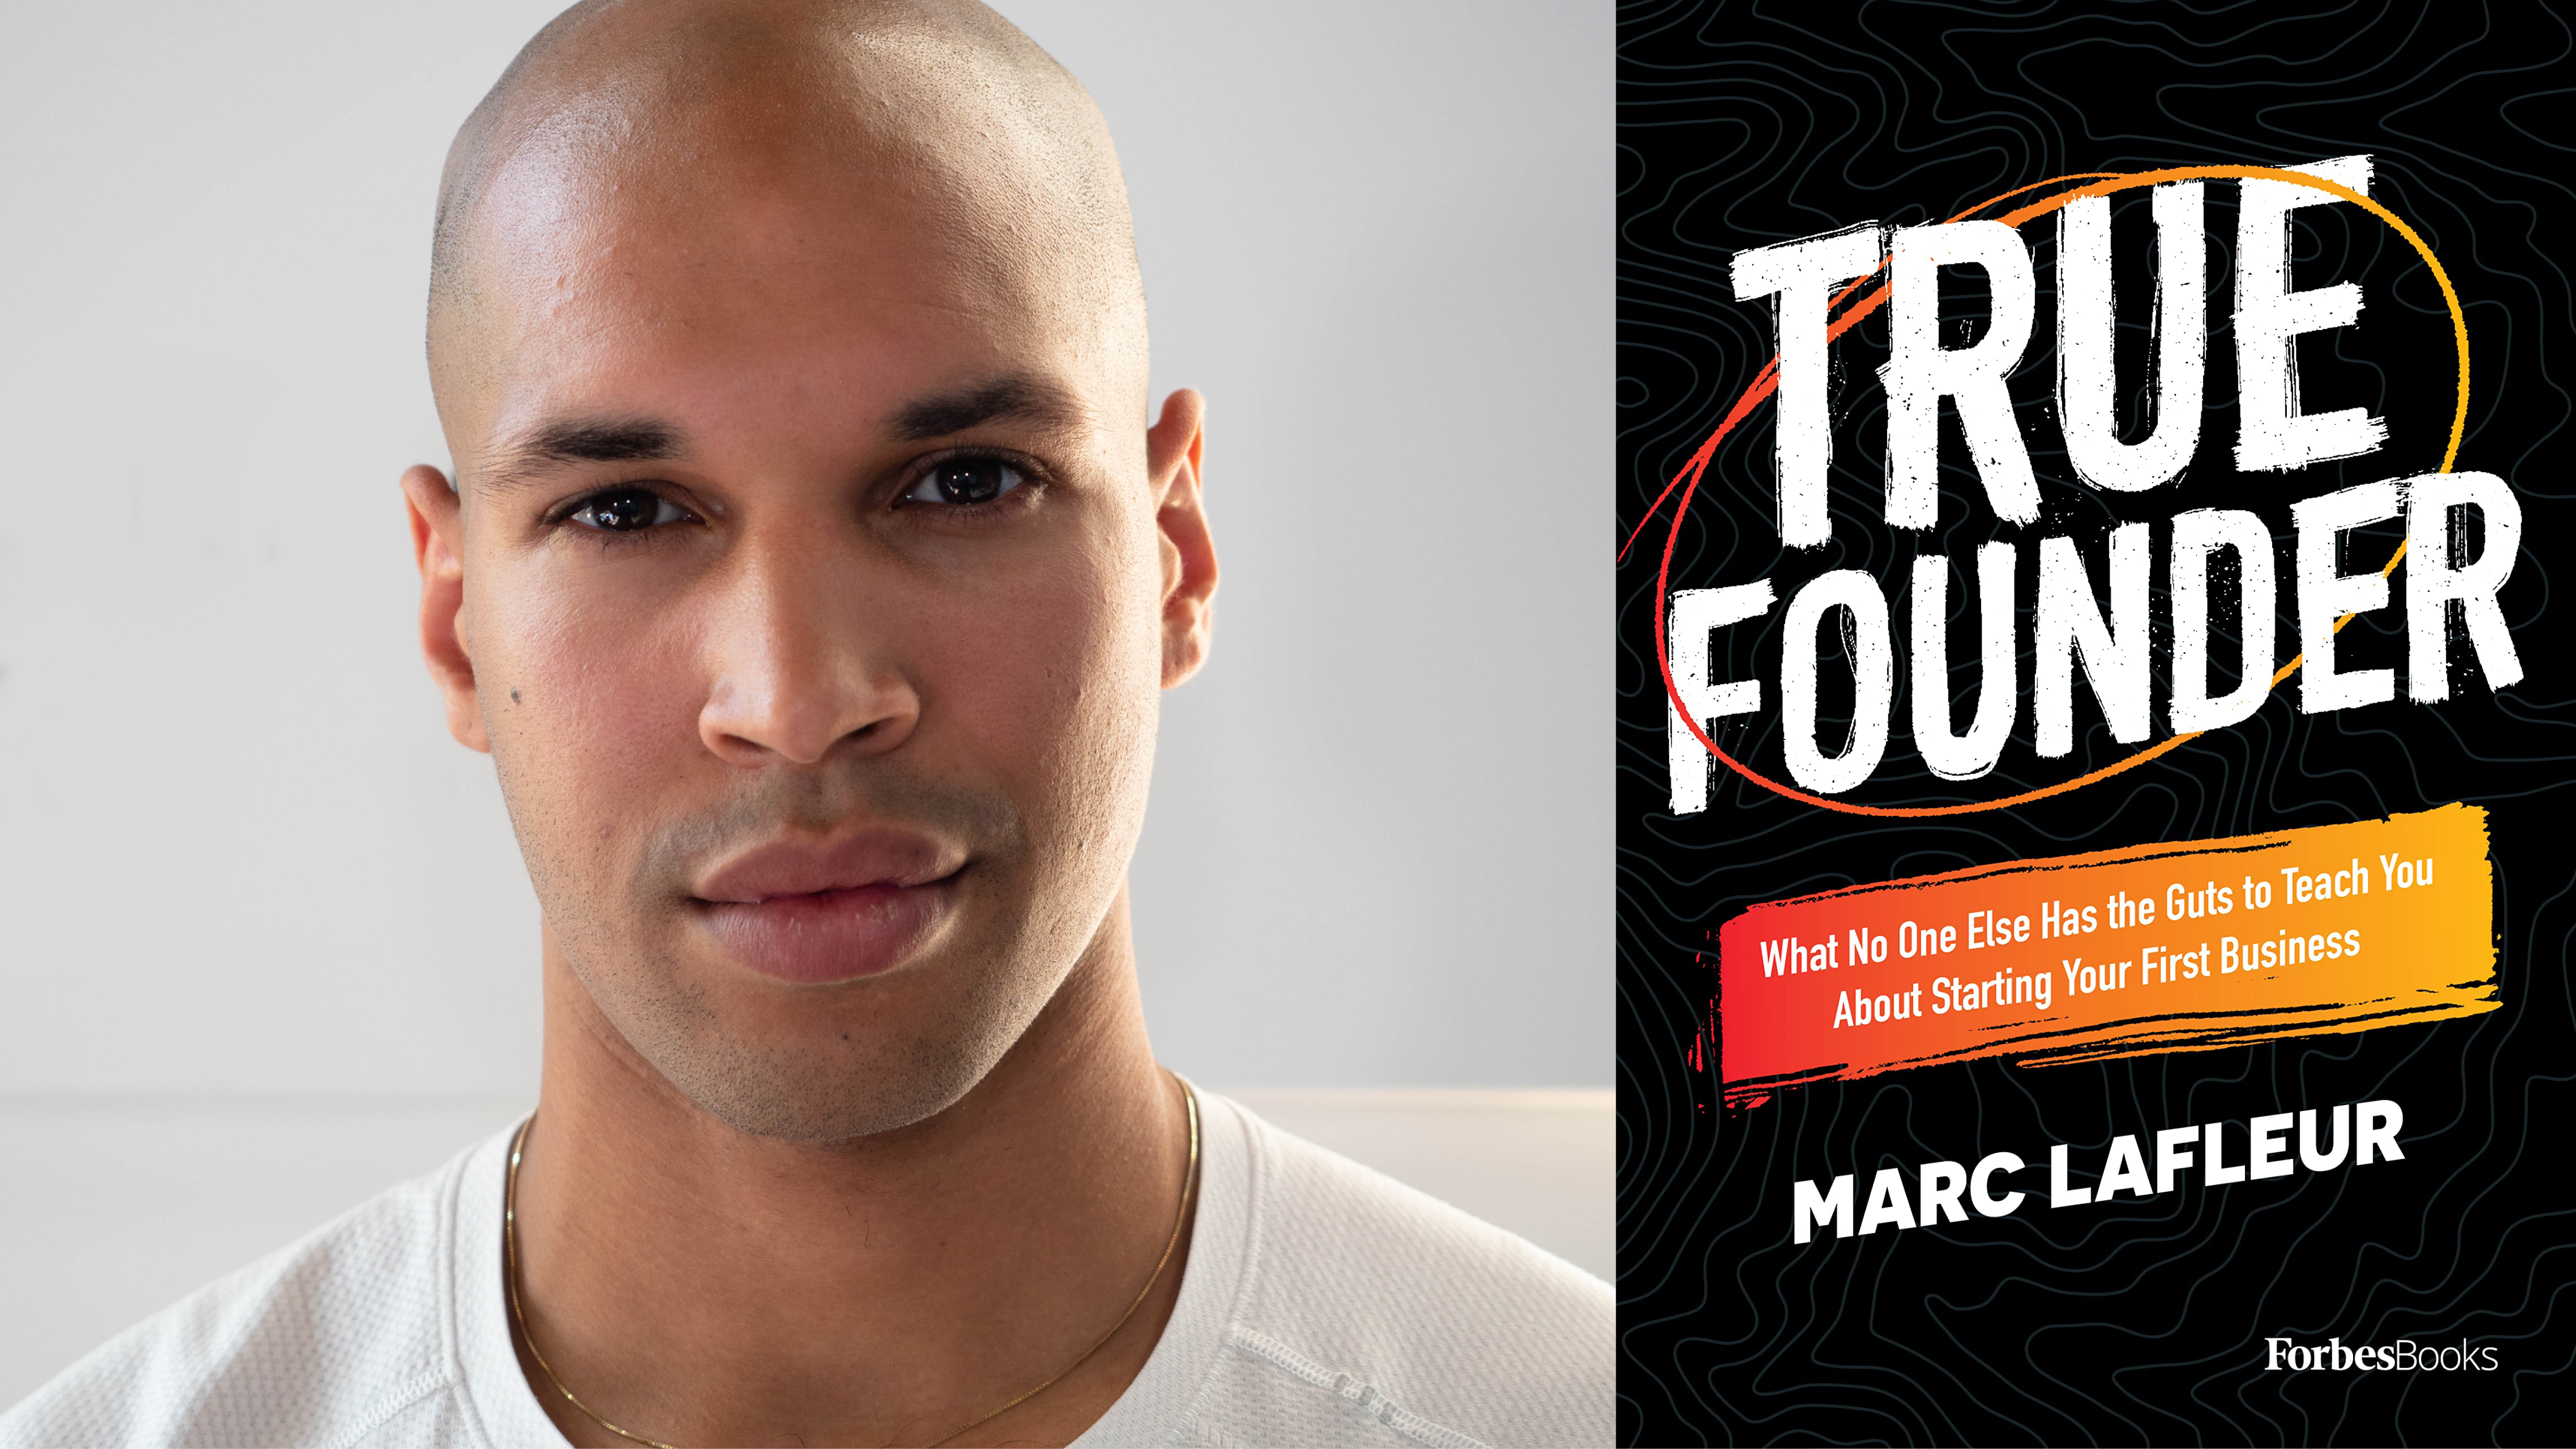 True Founder: Marc Lafleur’s Debut Book Shares a Real-Life Look at Entrepreneurship